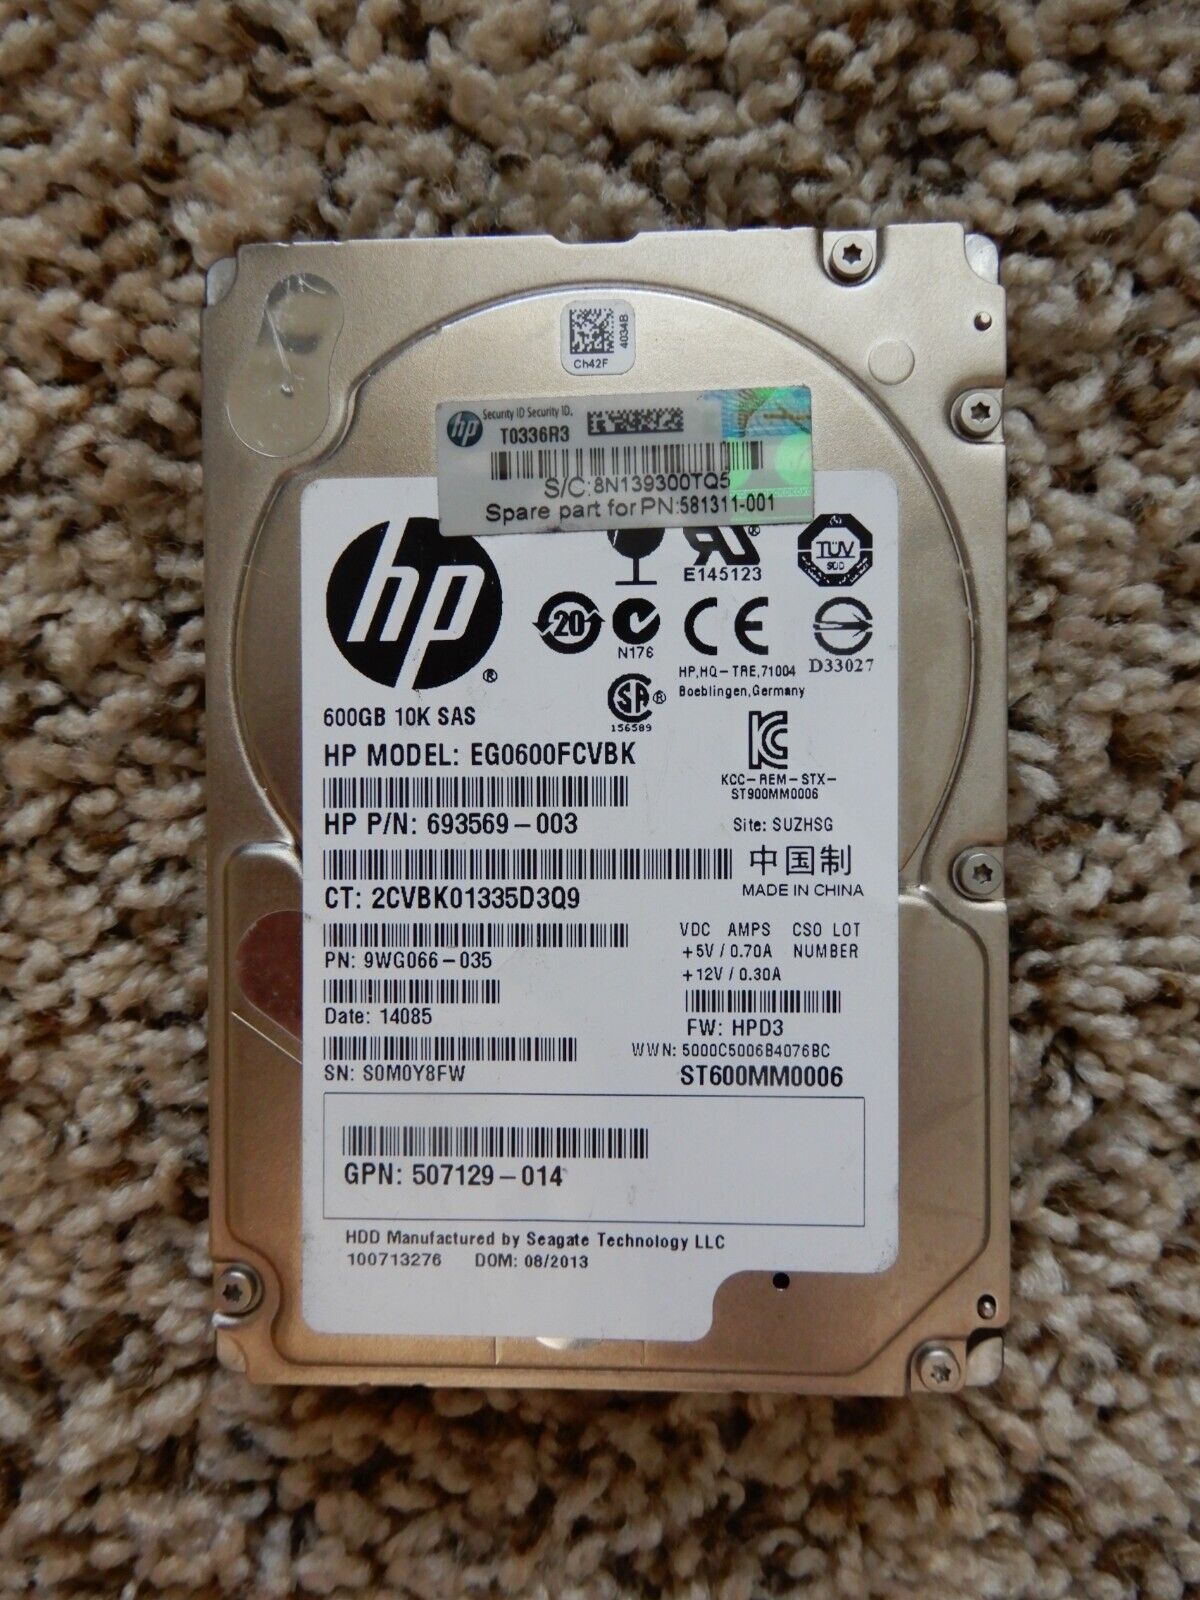 Seagate HP ST600MM0006 600 GB SAS 2 2.5 in Enterprise Hard Drive